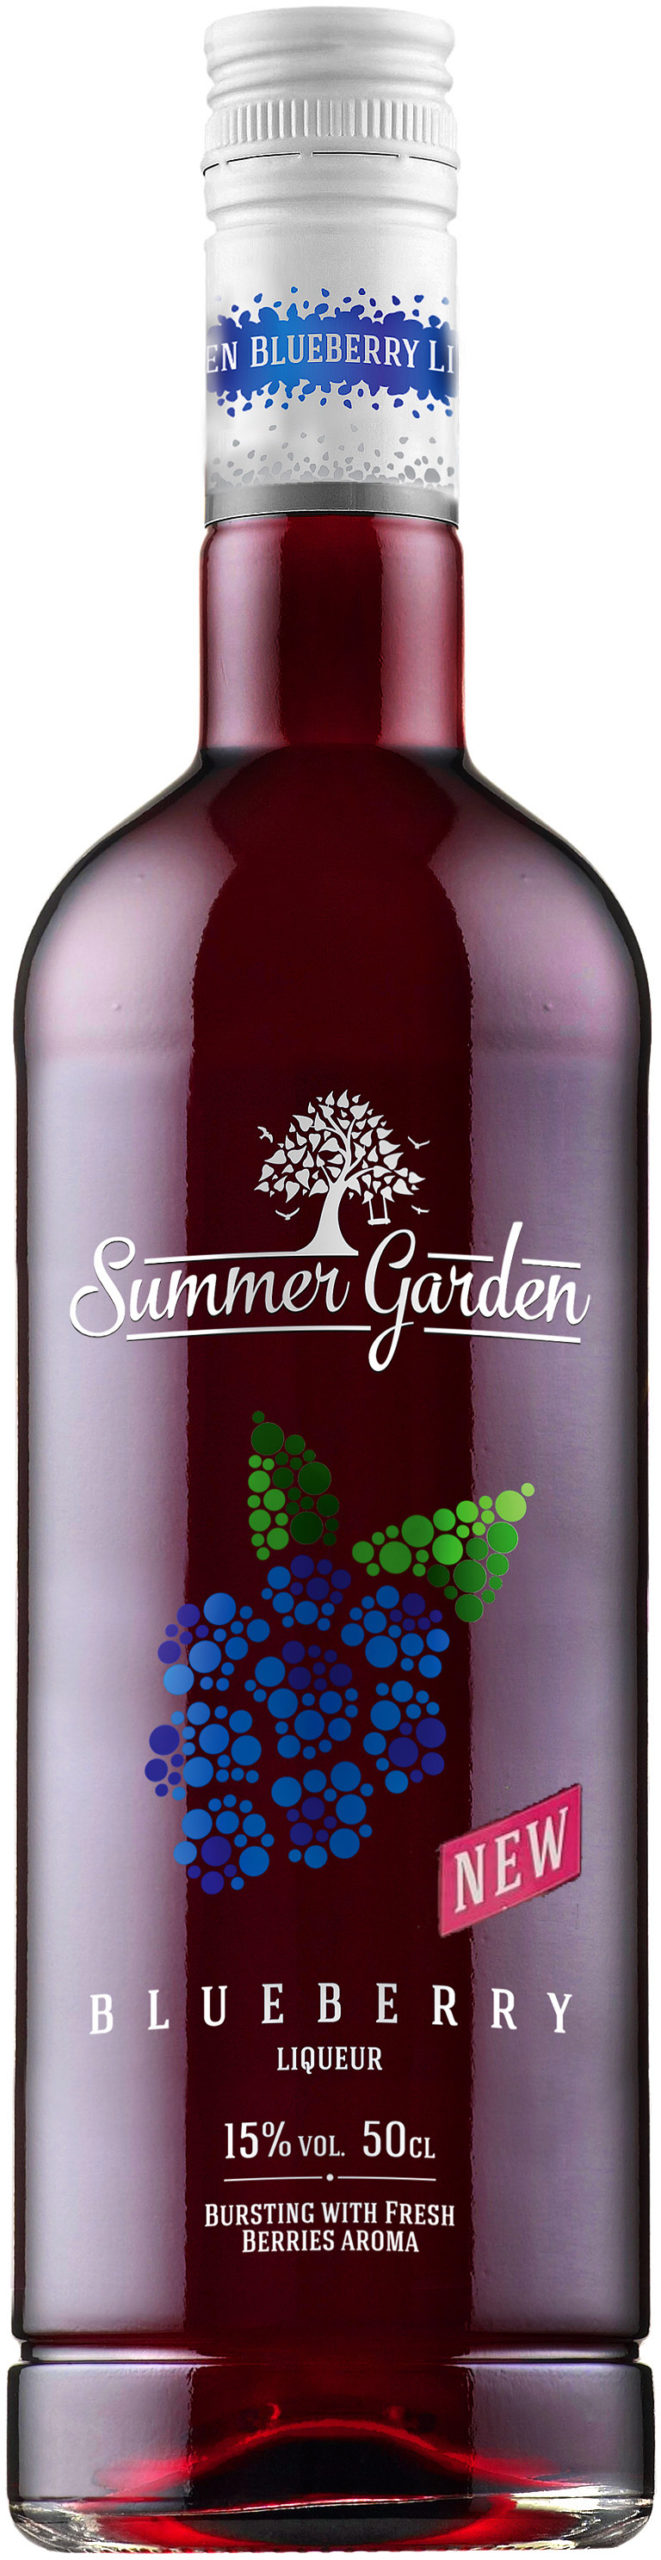 Summer Garden Blueberry